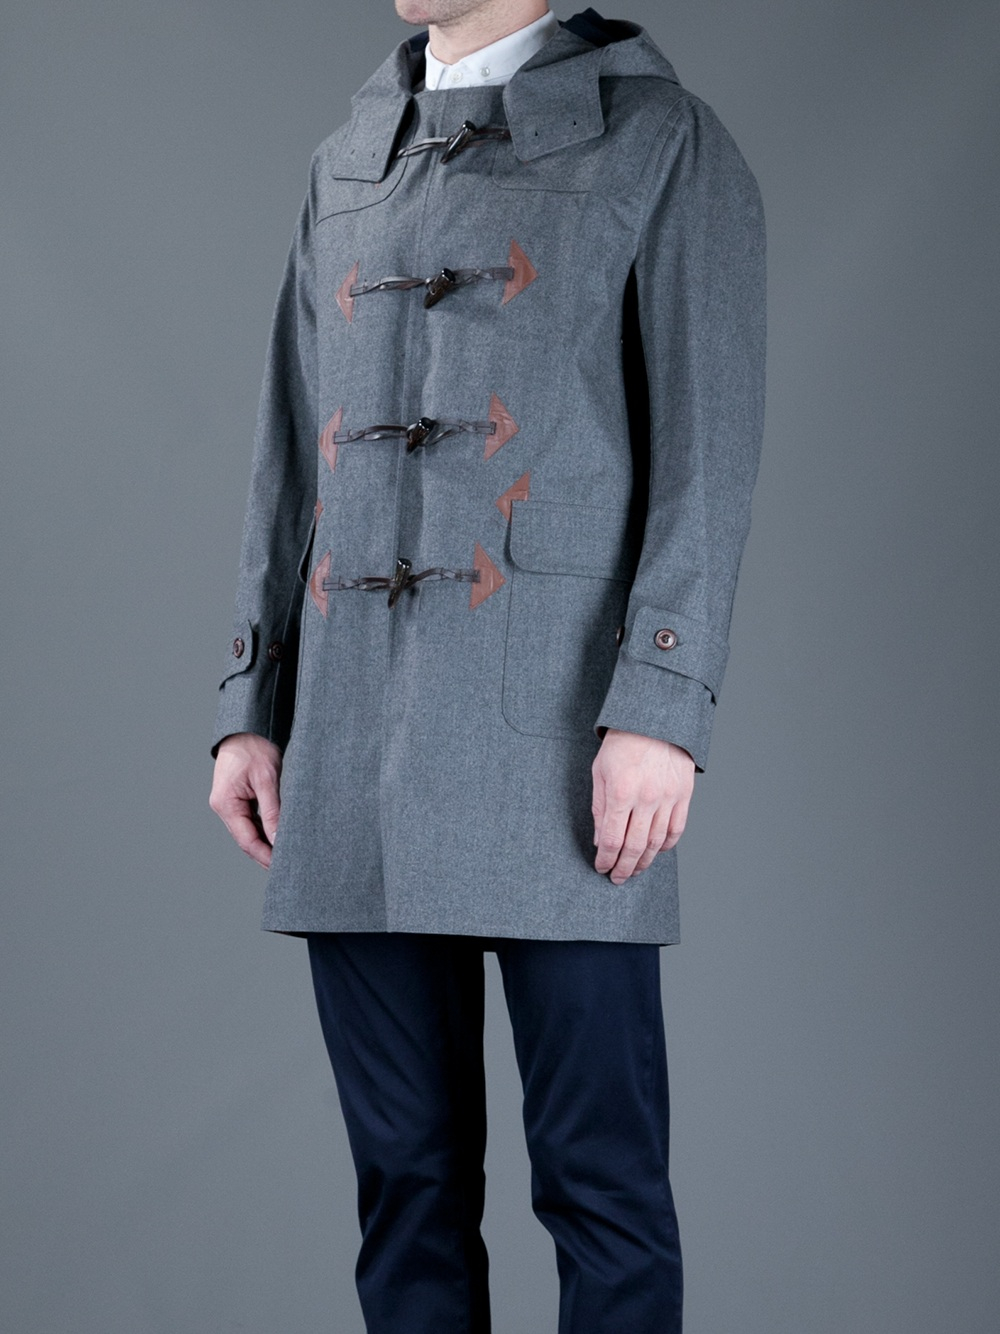 Mackintosh Weir Duffle Coat in Gray for Men - Lyst